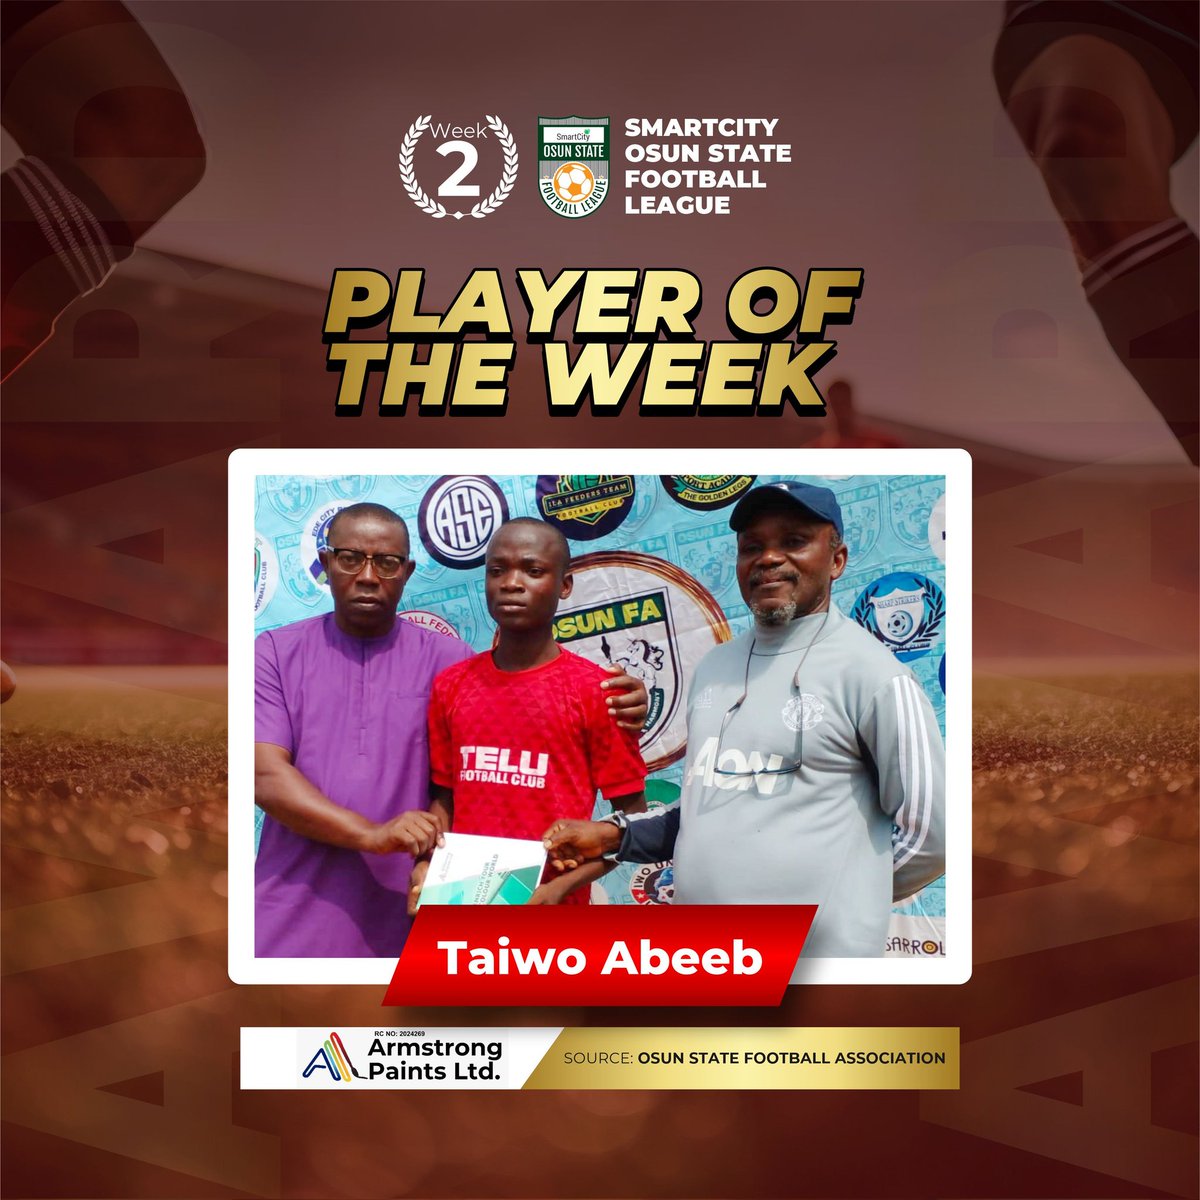 Taiwo Habeeb of Telu FC, Iwo, wins the #ArmstrongPaints Player Of the match for Week three. 

#SmartCityPLCOsunFALeague
#ArmstrongPaints
#SoteroWater. 
#BlackDrumTV